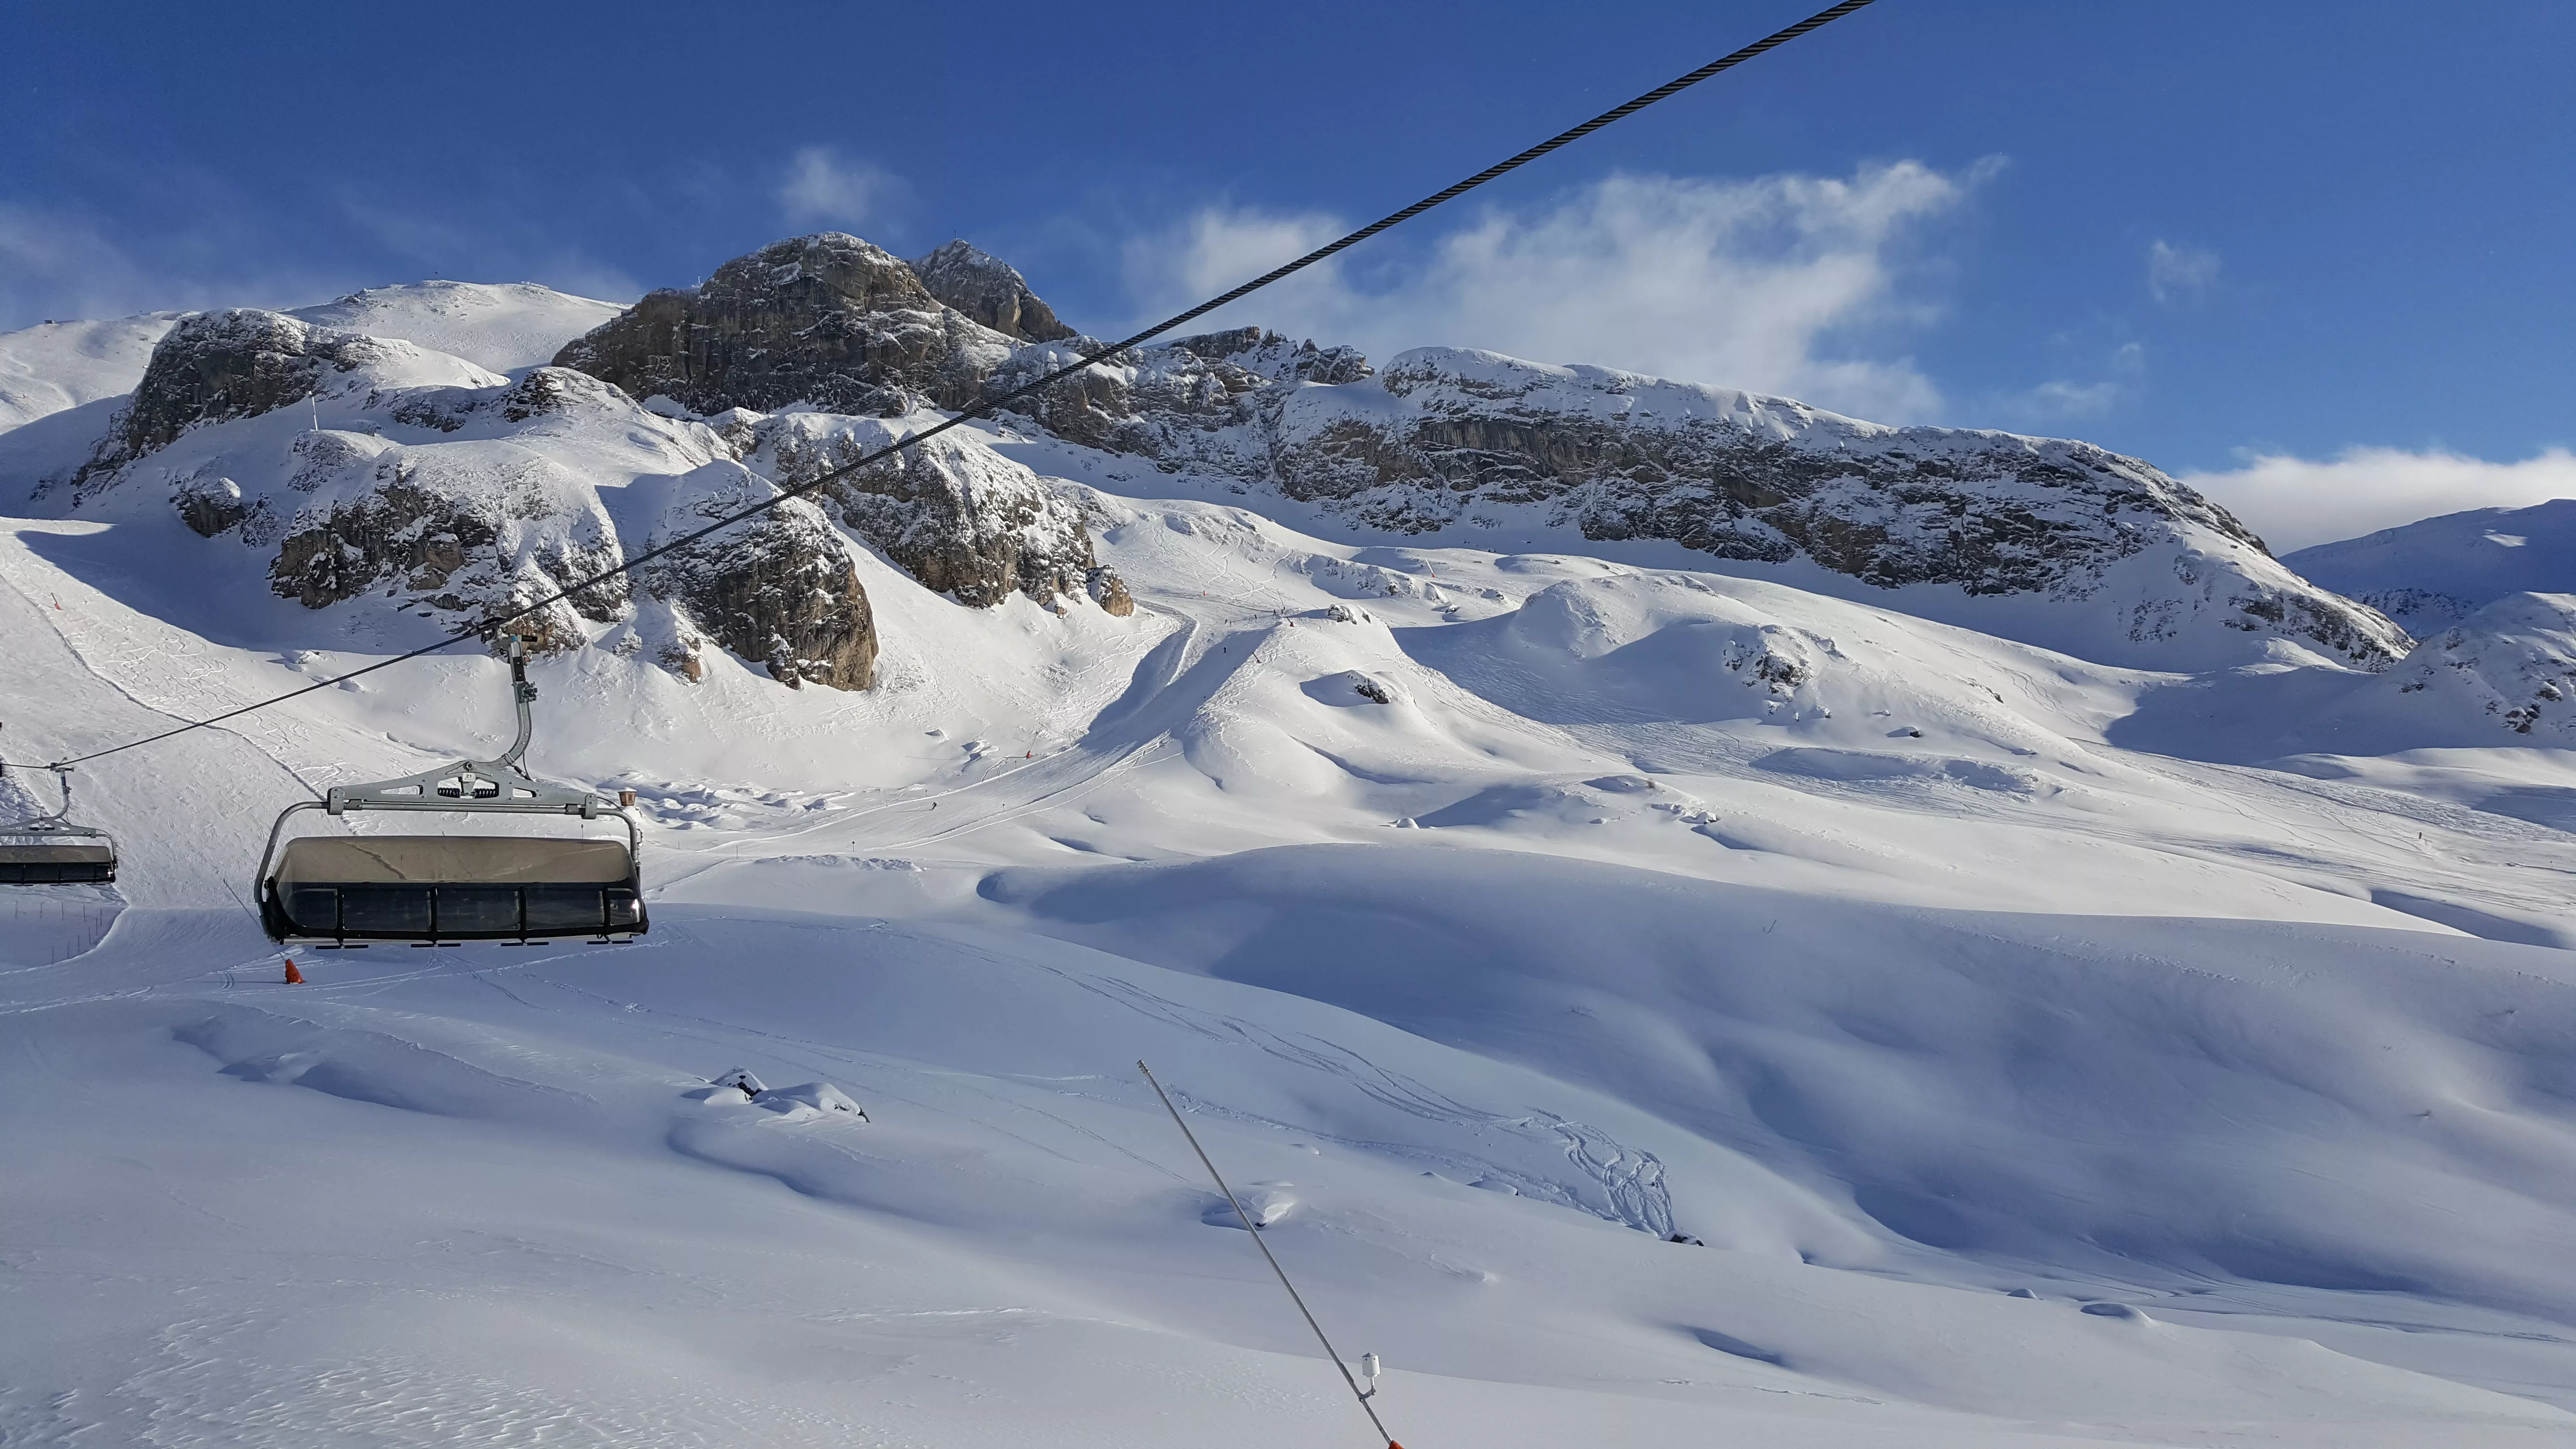 Silvretta Arena in Austria, Europe | Snowboarding,Mountaineering,Skiing - Rated 4.3